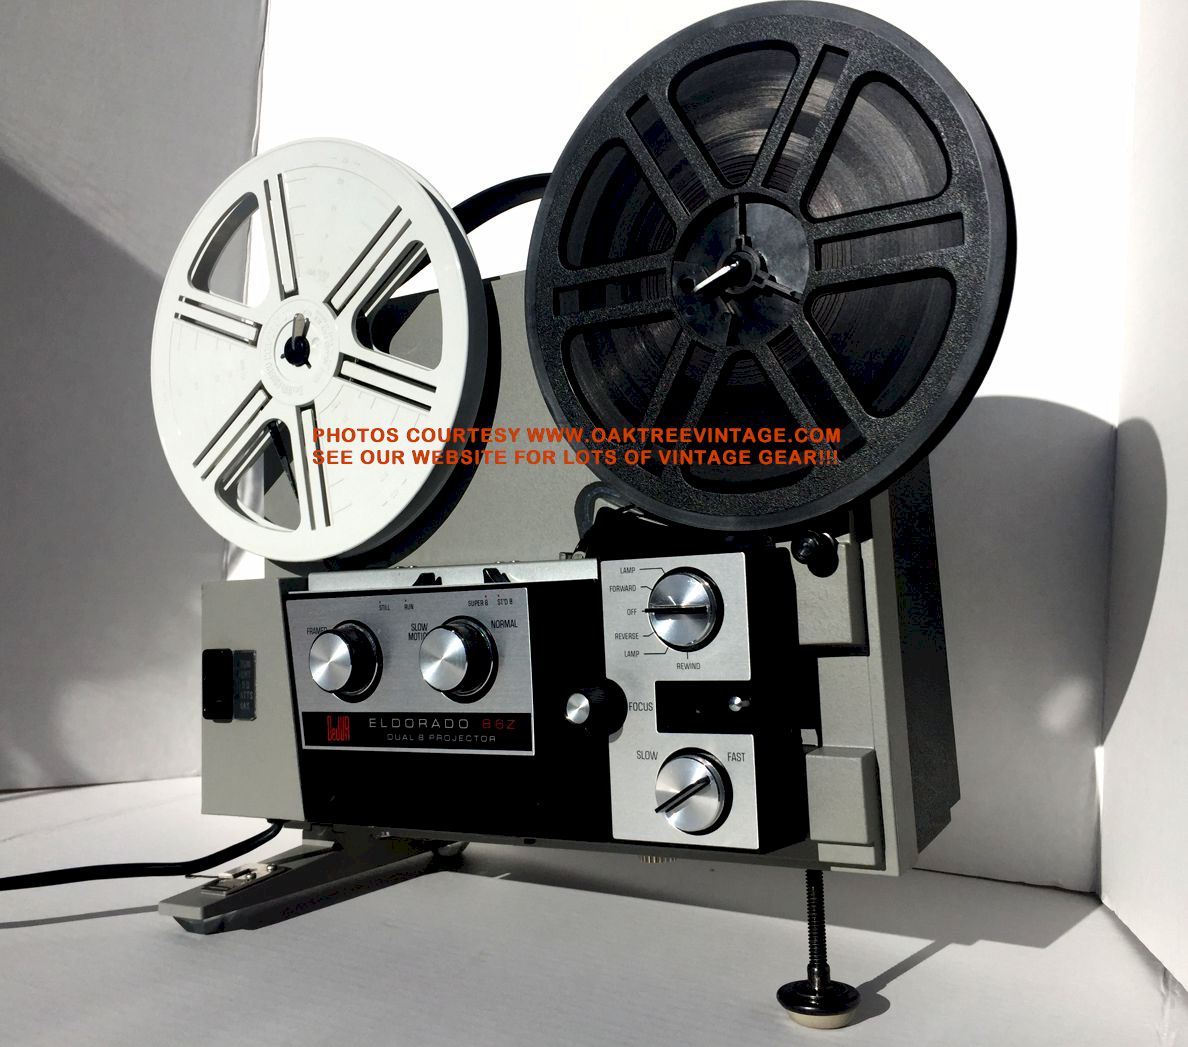 http://www.oaktreevintage.com/web_photos/8mm_Film/dejur_eldorado_86z_dual-8mm_film-movie_projector_web.jpg